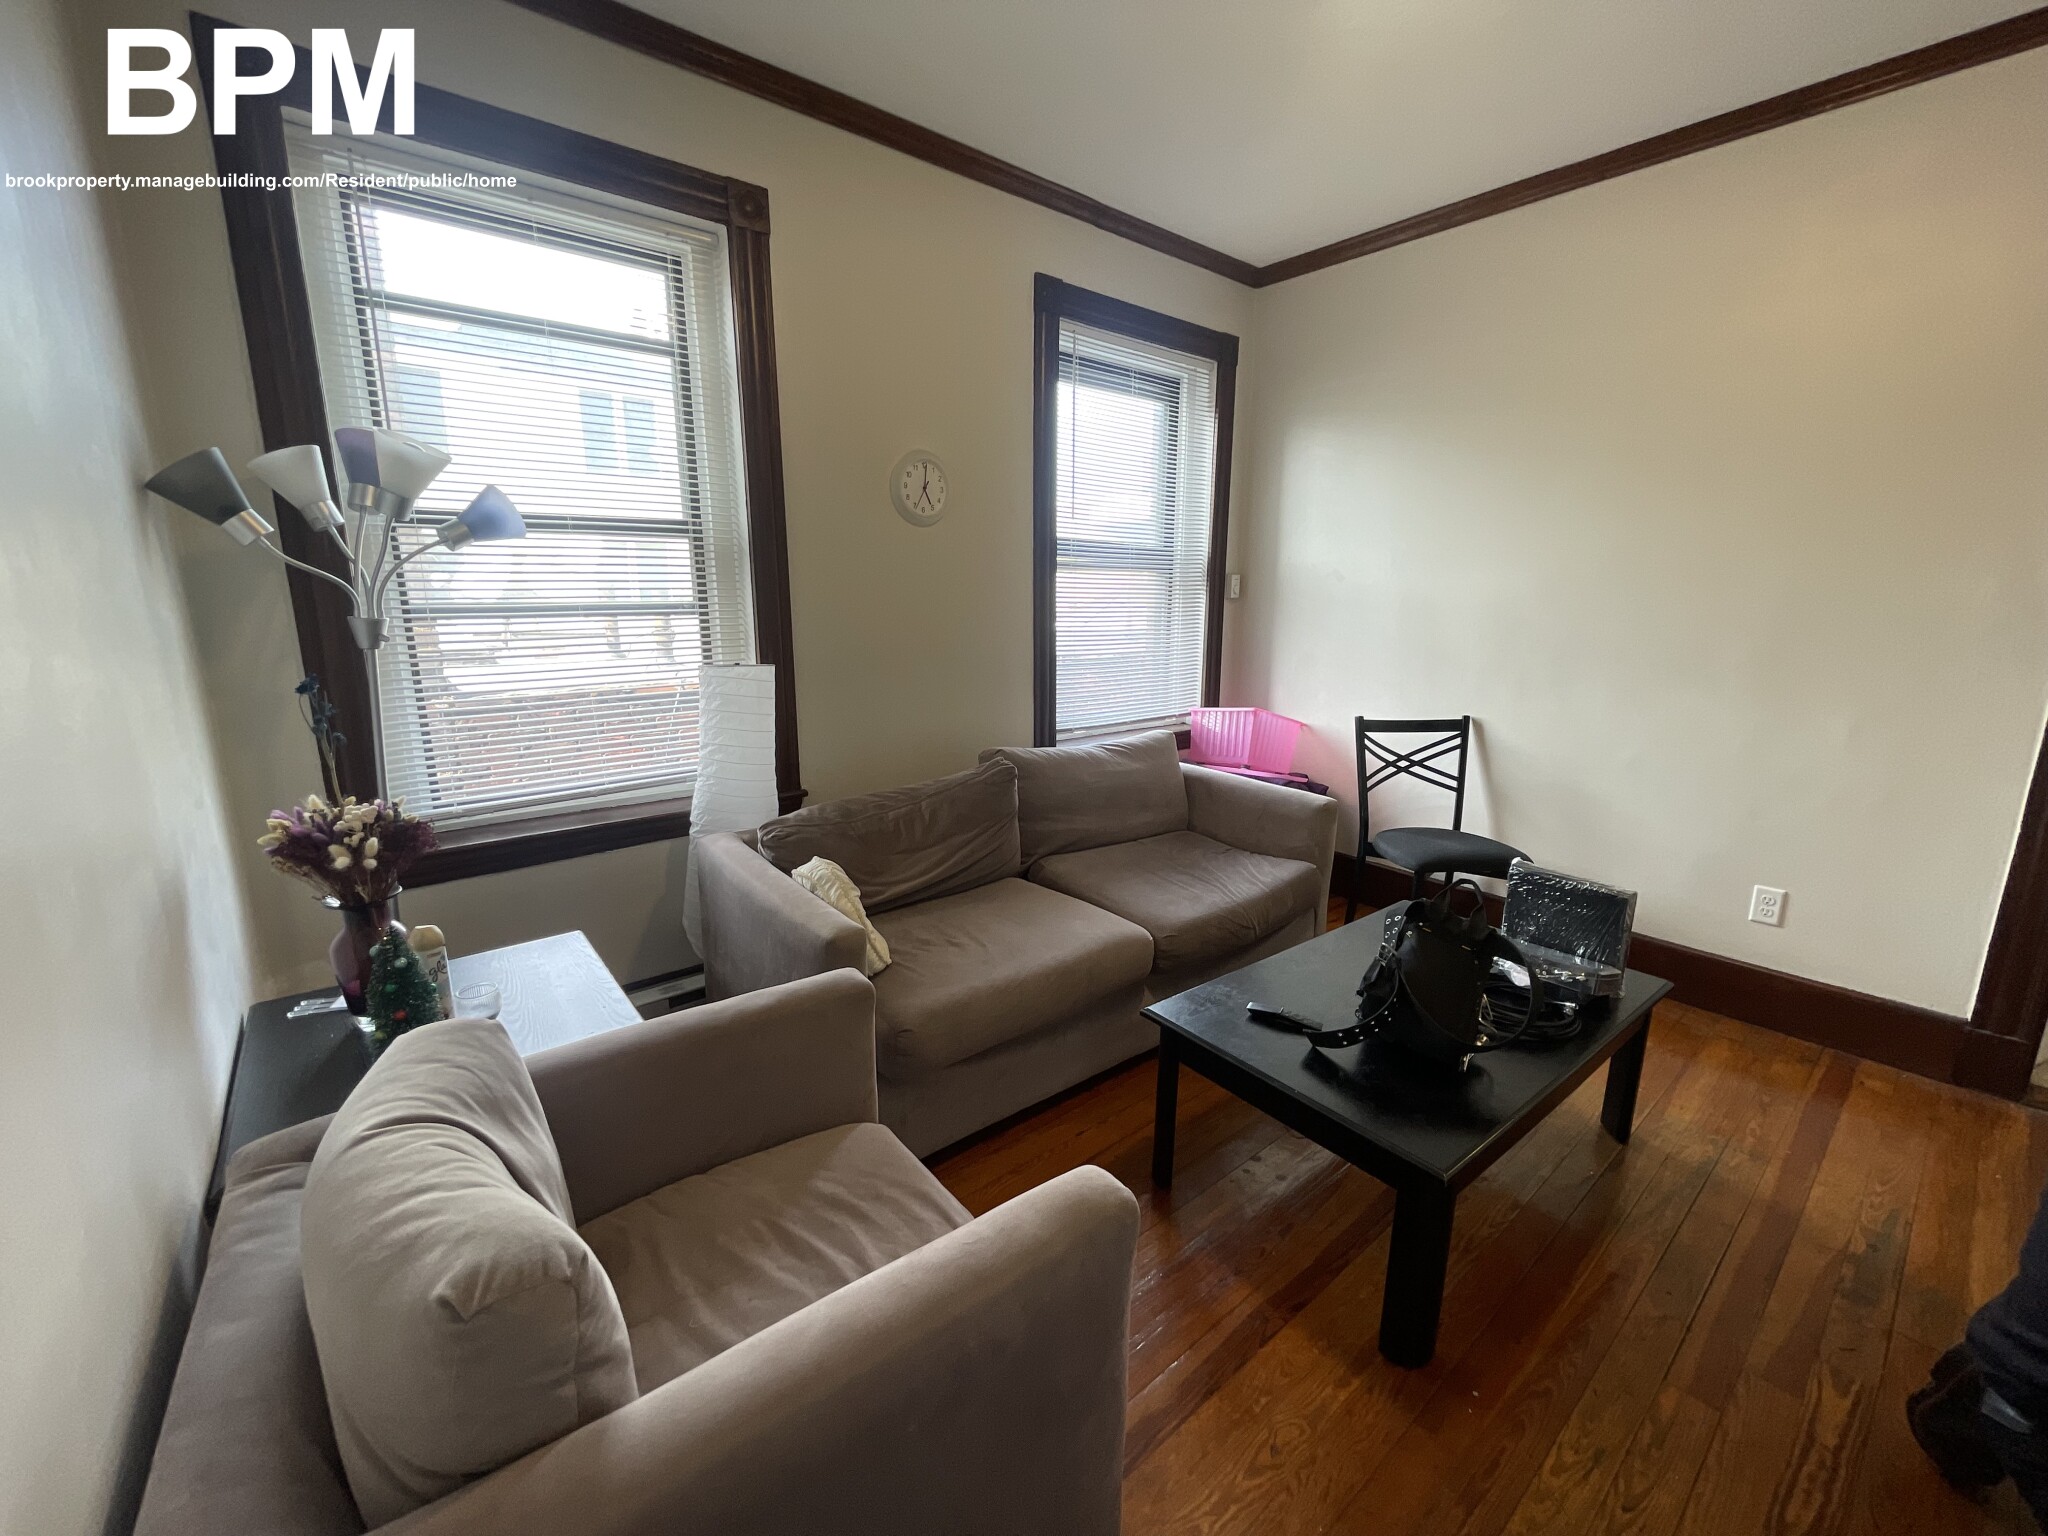 Photos of apartment on Chelsea St.,Boston MA 02128